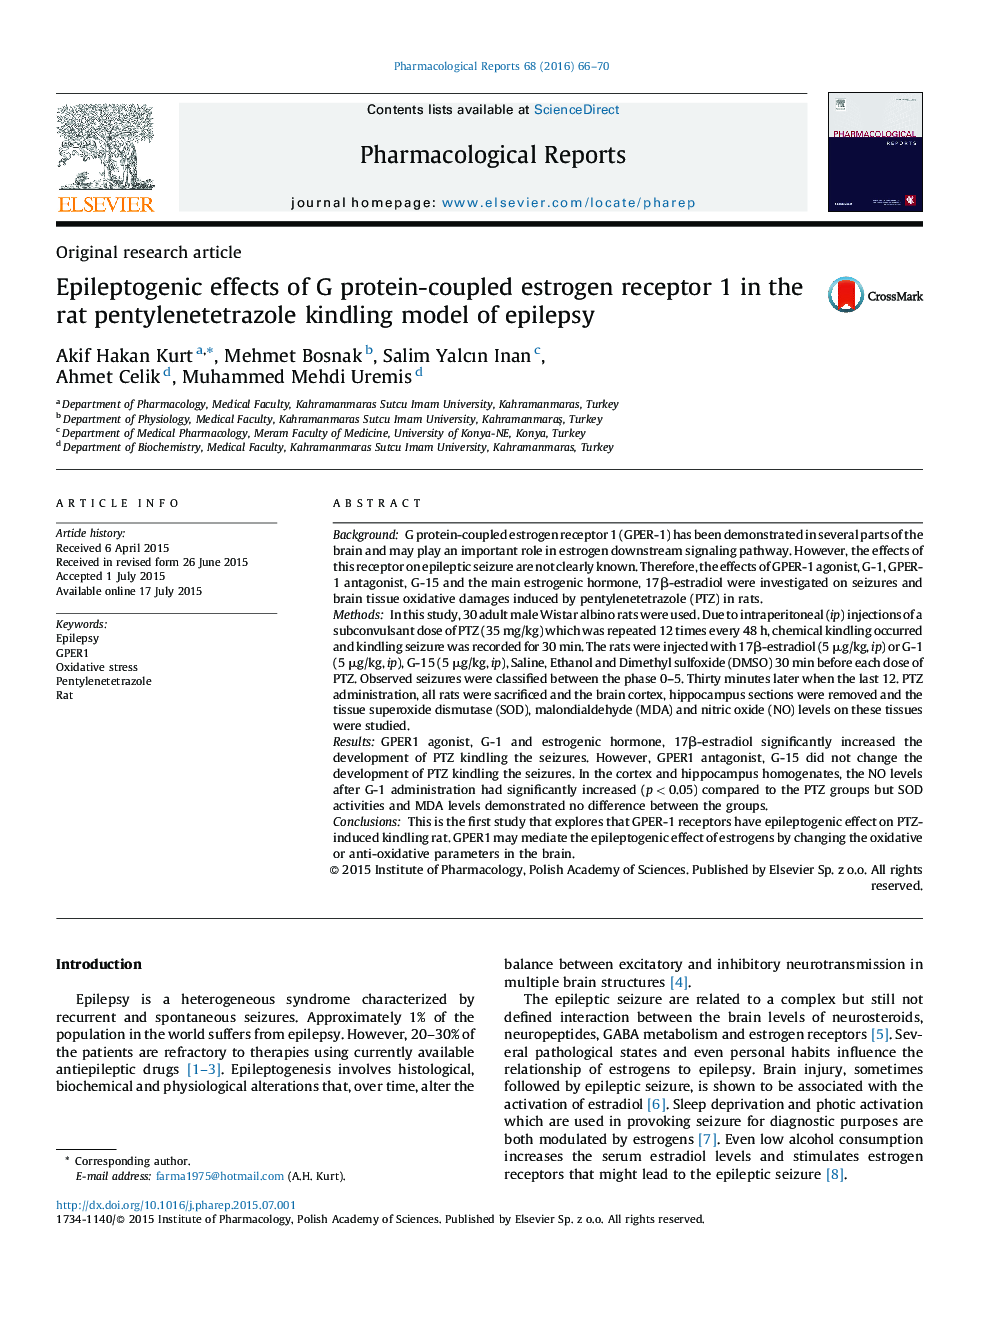 Epileptogenic effects of G protein-coupled estrogen receptor 1 in the rat pentylenetetrazole kindling model of epilepsy